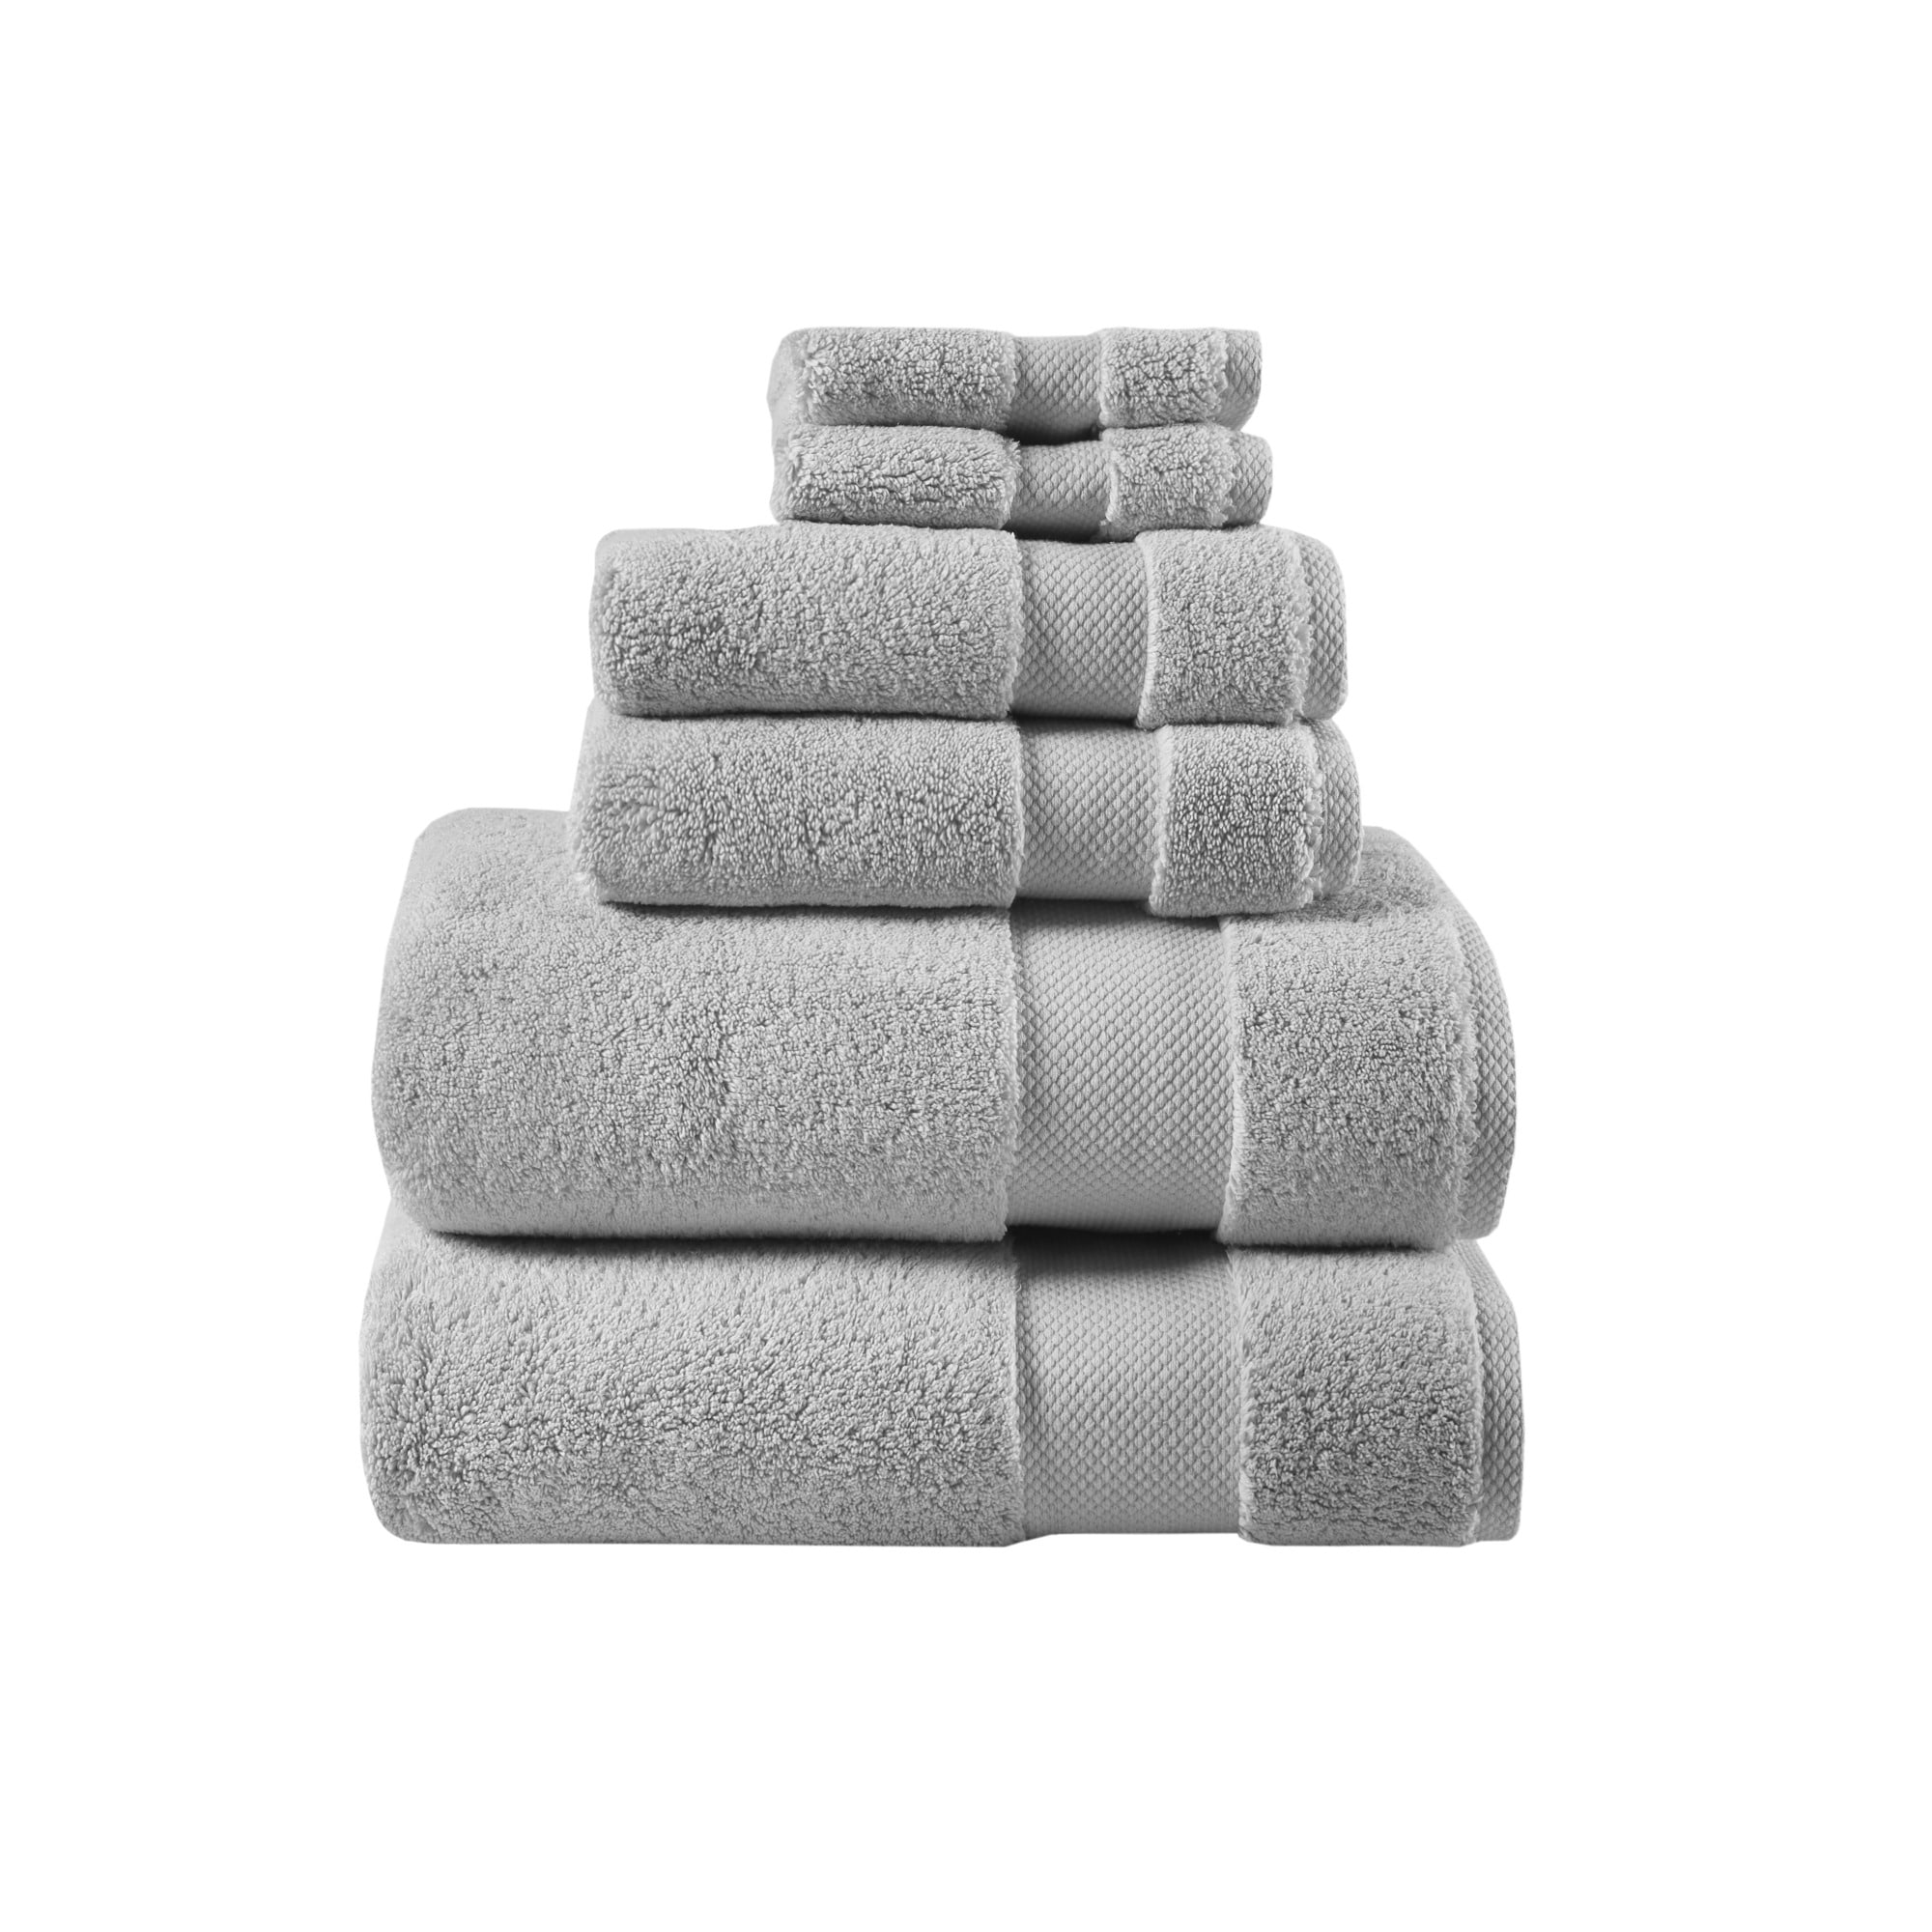 Bath Sheets Bathroom Towel Set- 4 Pack 100% Cotton Extra Large Bath Towels, Oversized  Bath Towels, Luxury Bath Towels Large Bathroom Set, Shower Towels Bath Towel  Sets for Bathroom, 35x66 - Black